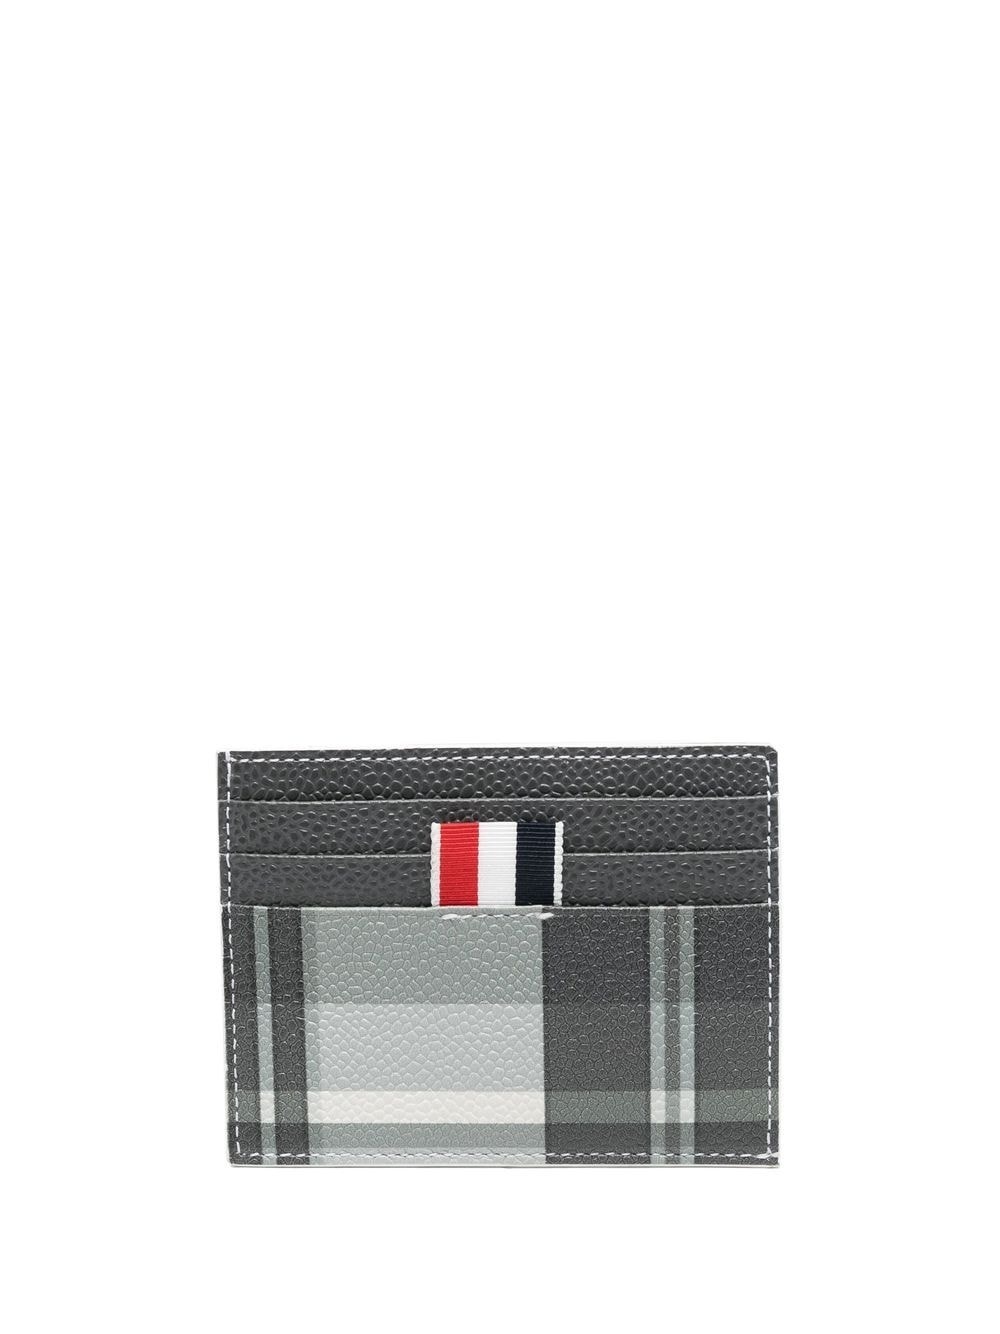 4bar leather credit card case - 1